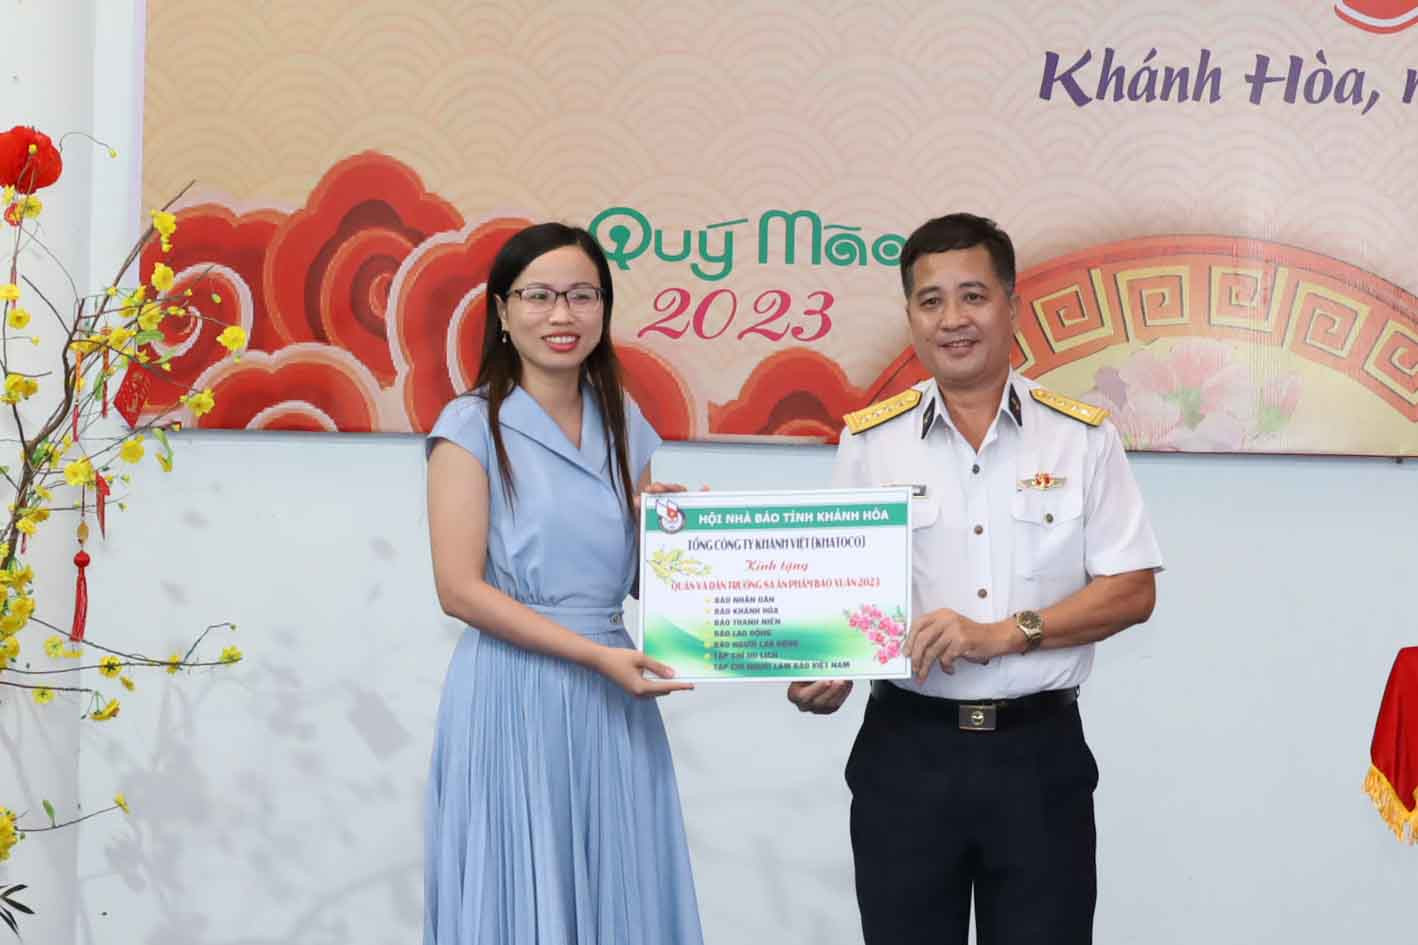 Representative of Khanh Viet Corporation (Khatoco) presented symbolic spring publications to the representative of Truong Sa (Spratly) District